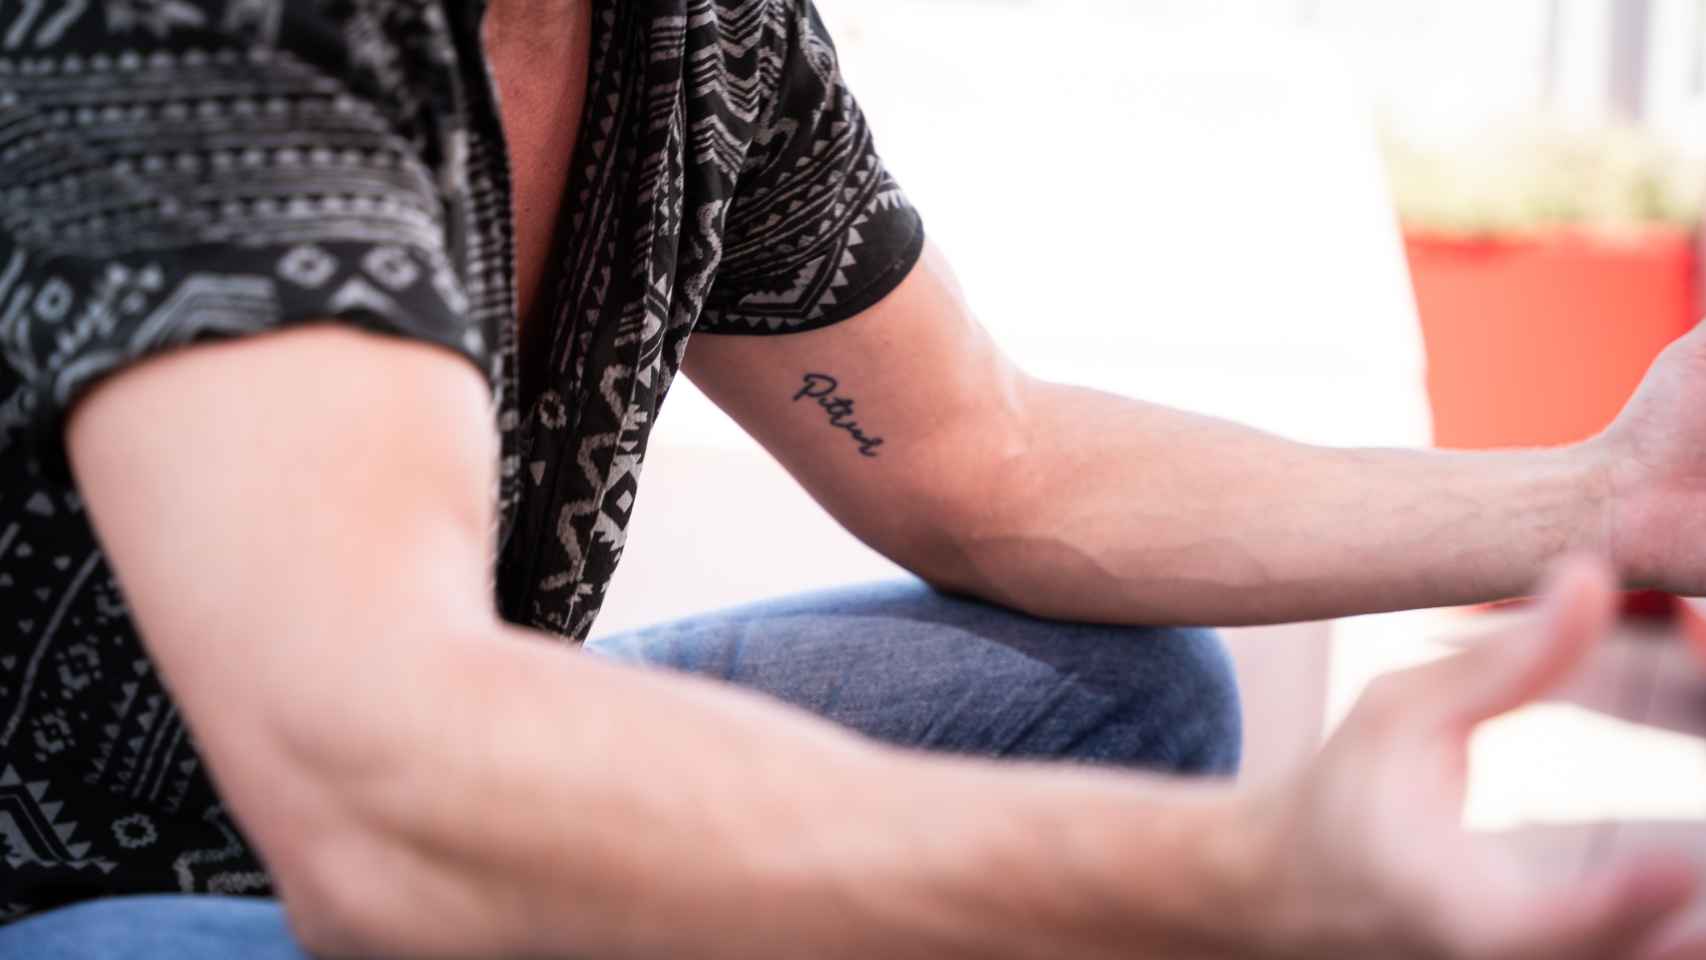 Detalle del tatuaje que Jaime Lorente lleva en su brazo izquierdo